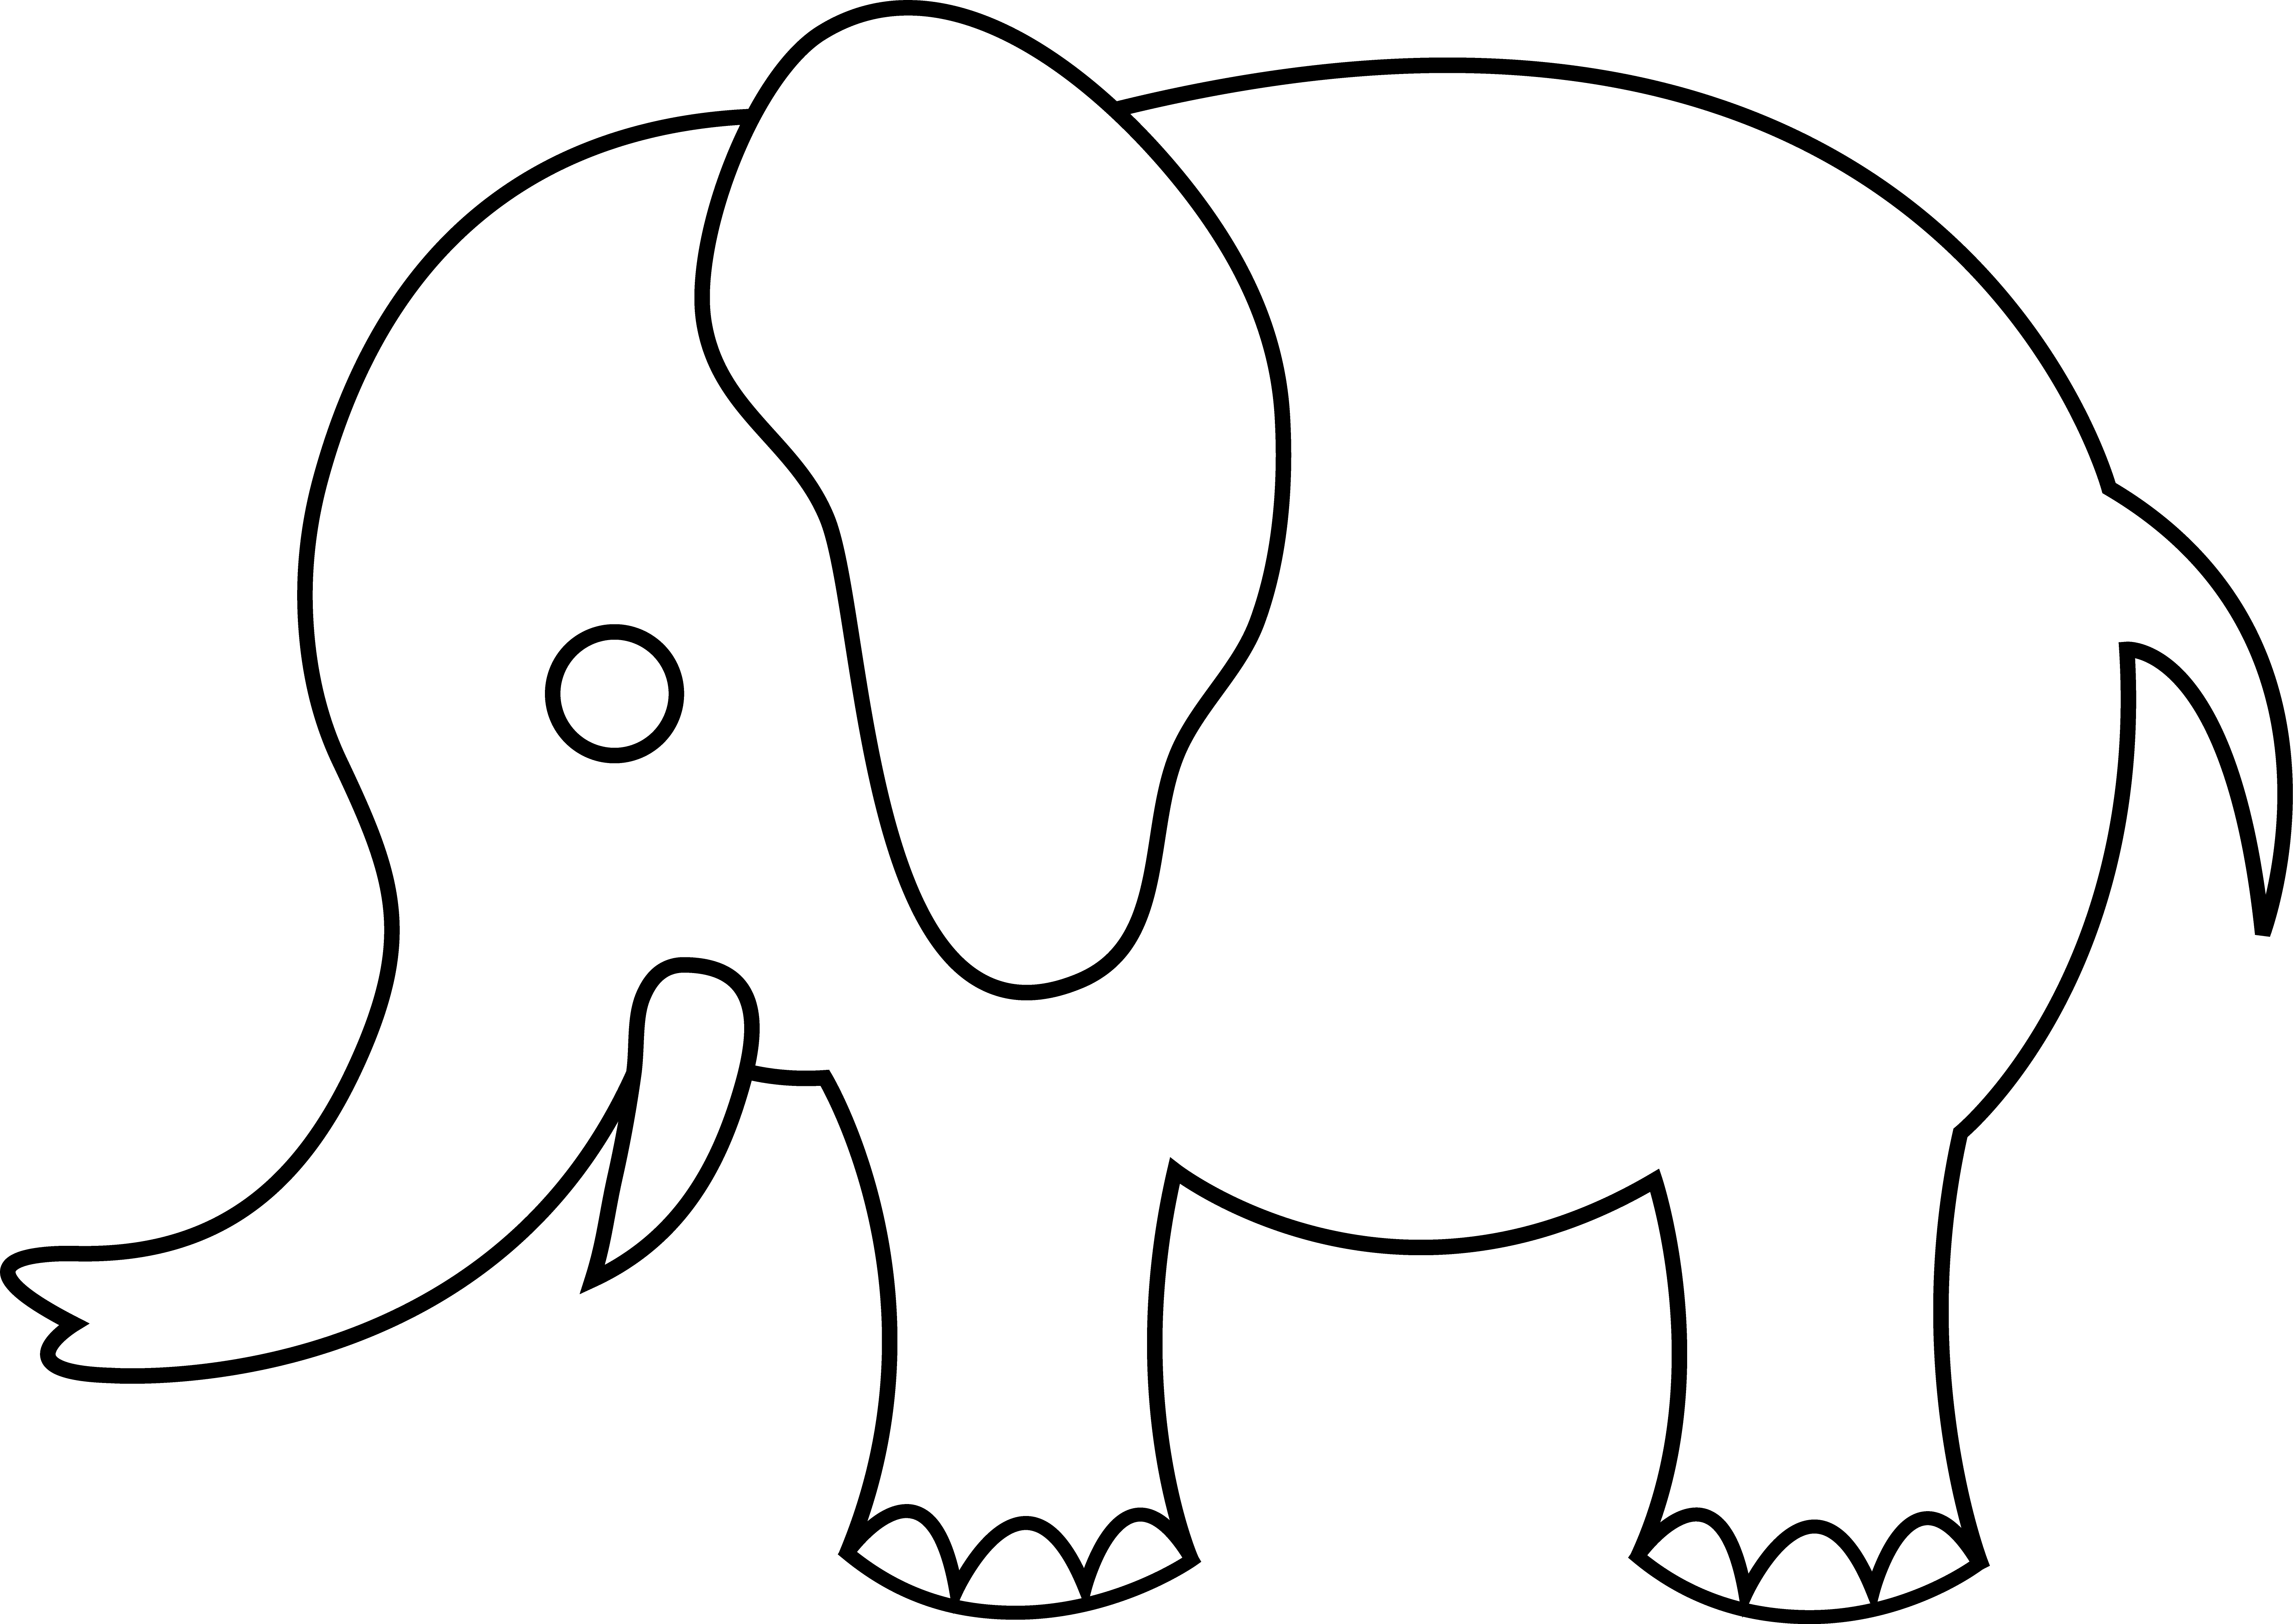 Elephant Cartoon Outline | Free Download Clip Art | Free Clip Art ...